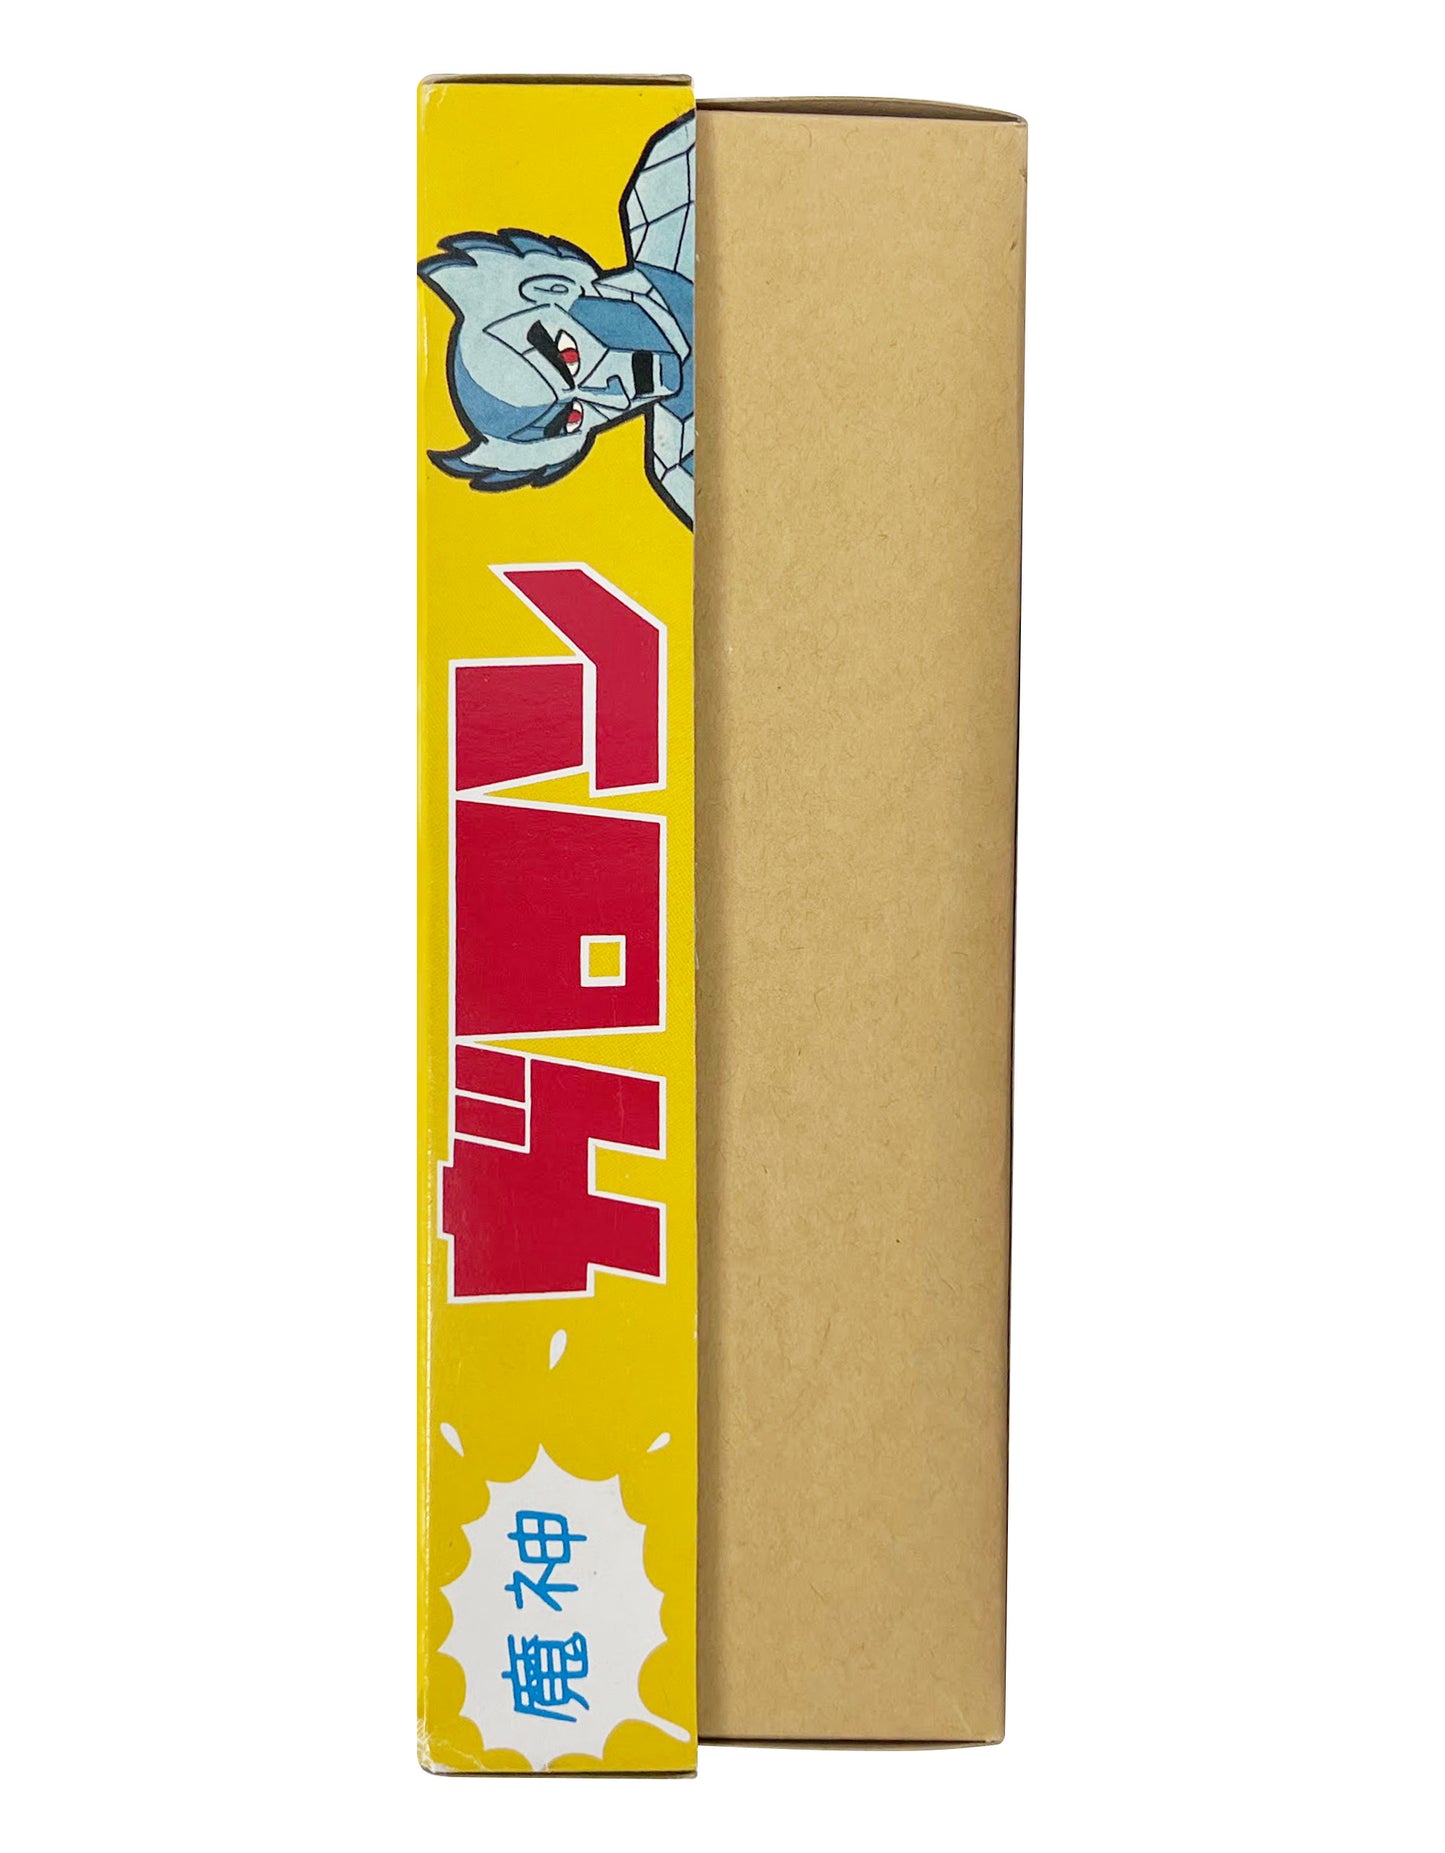 The Devil Garon Astro Boy Osaka Mechanical Tin Toy Wind-Up Made in Japan